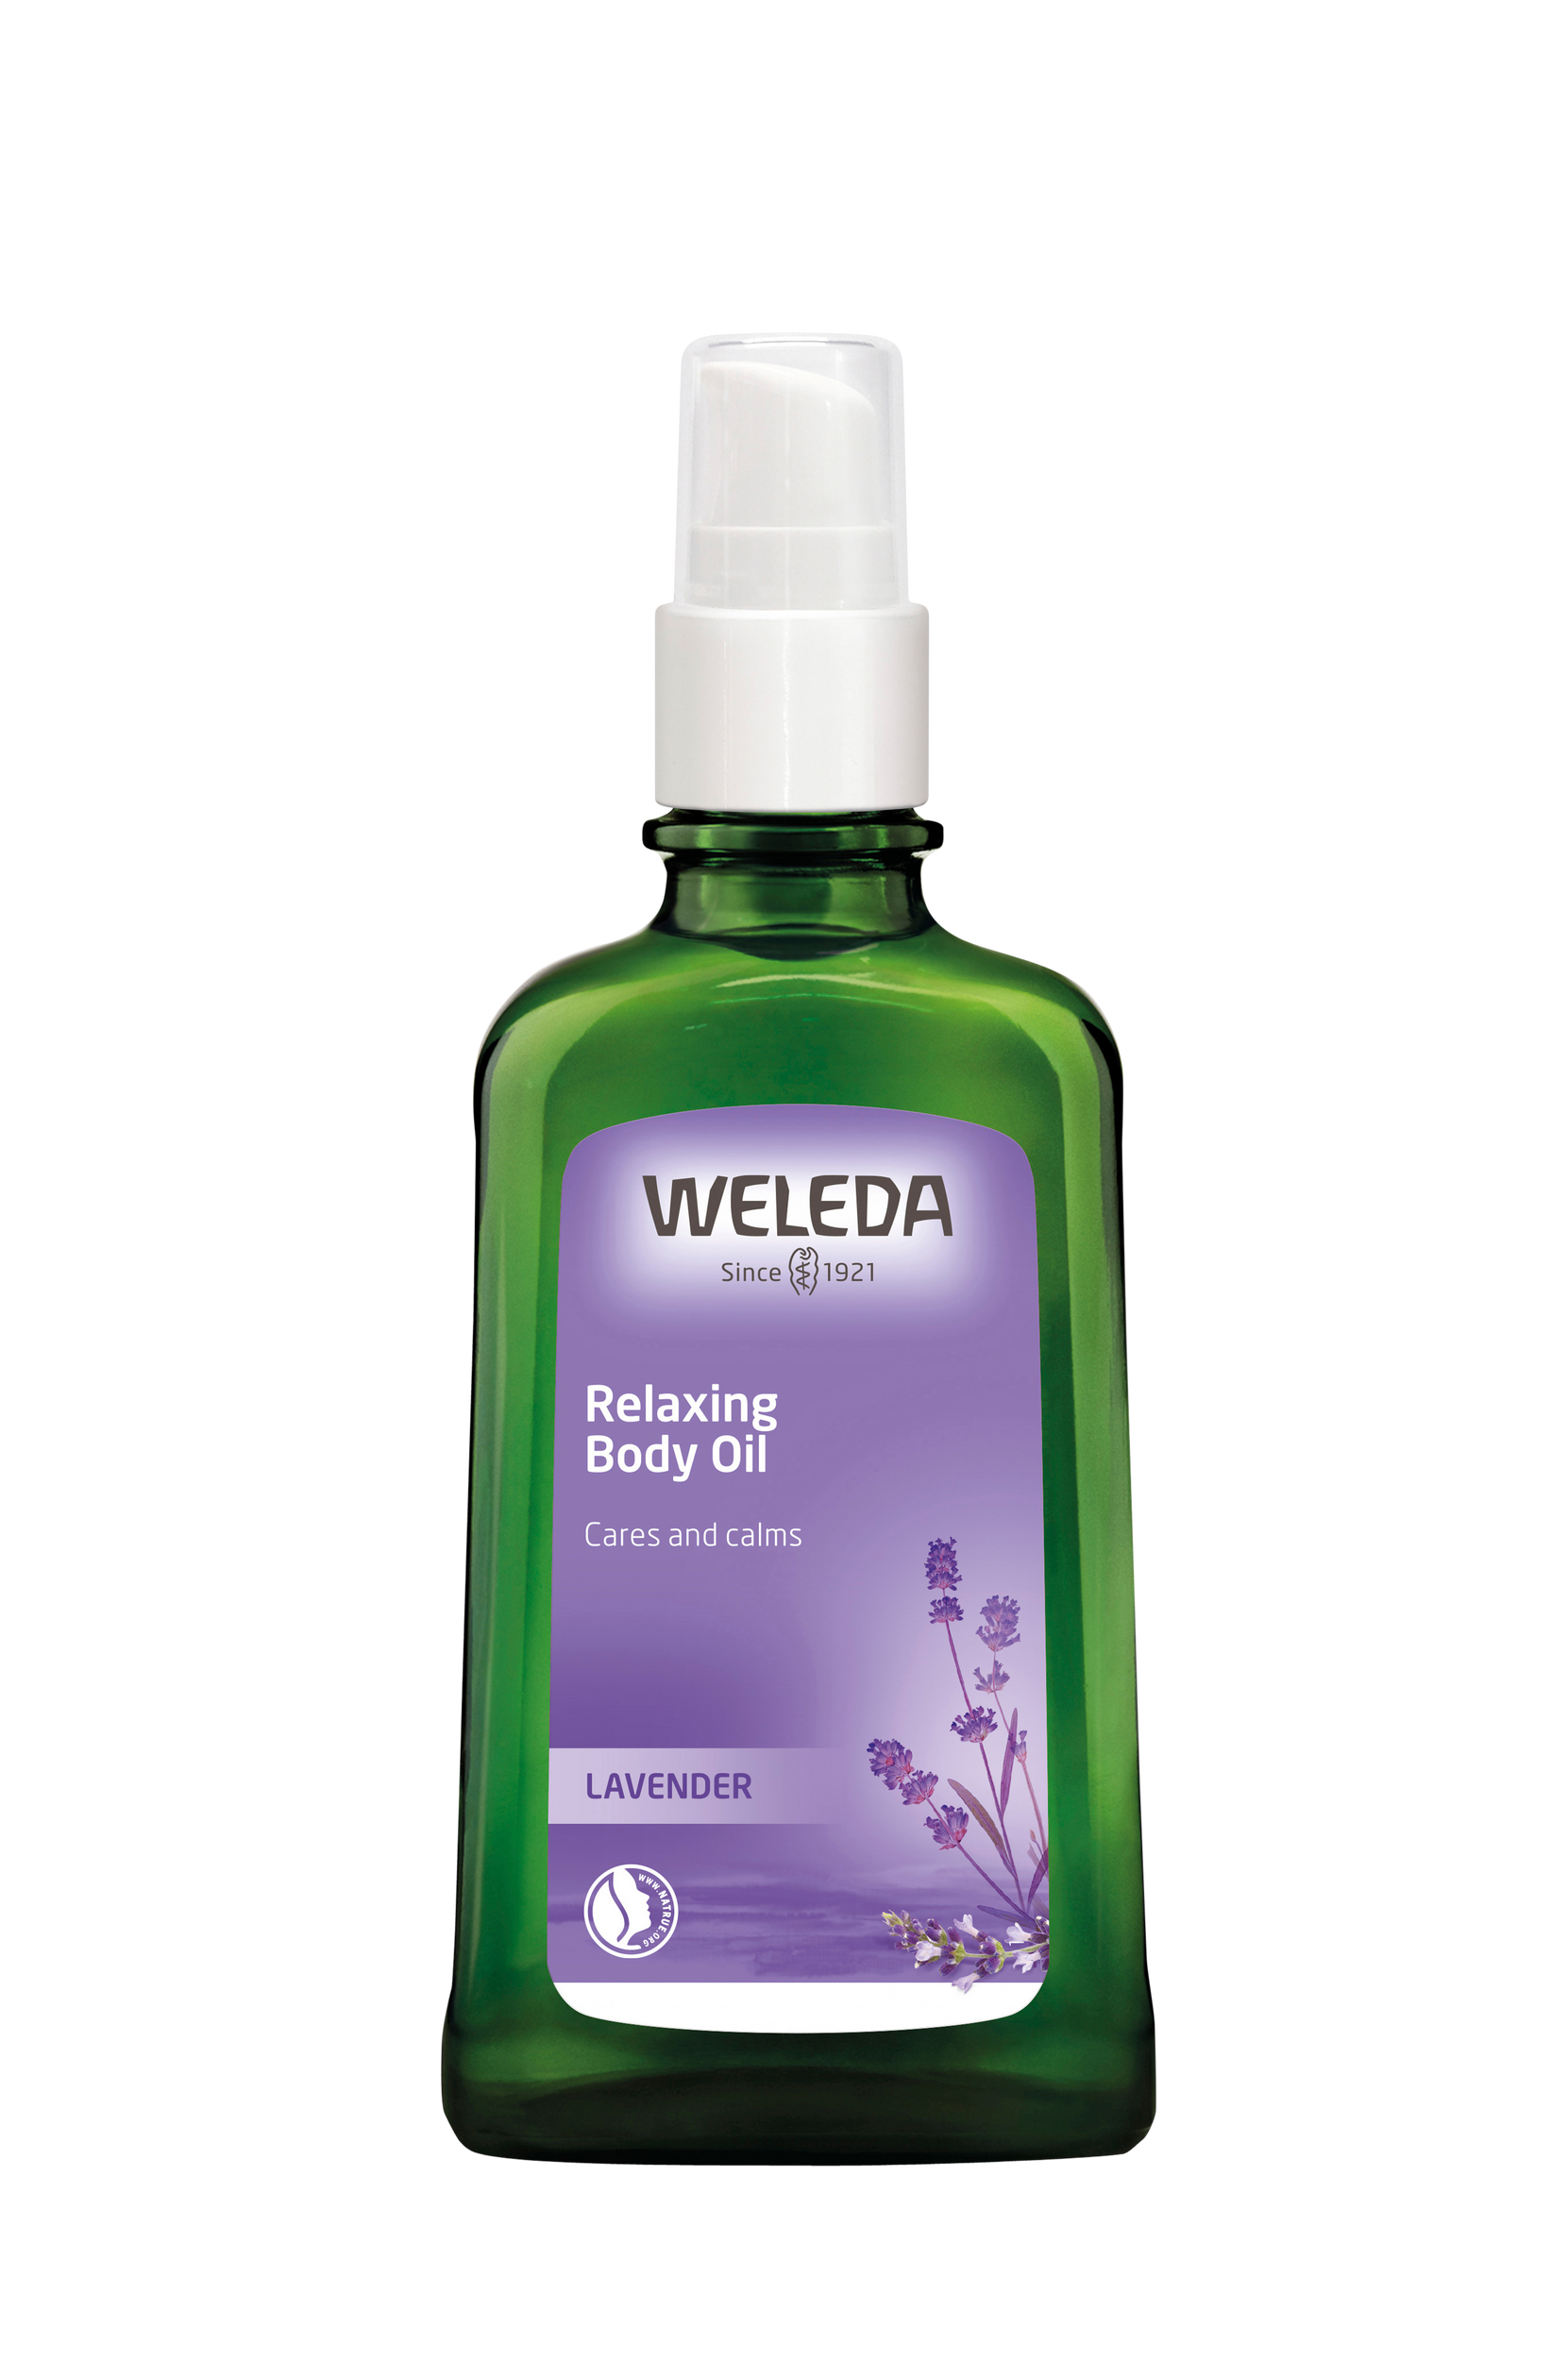 Lavender Relaxing Body Oil, 100 ml, Weleda